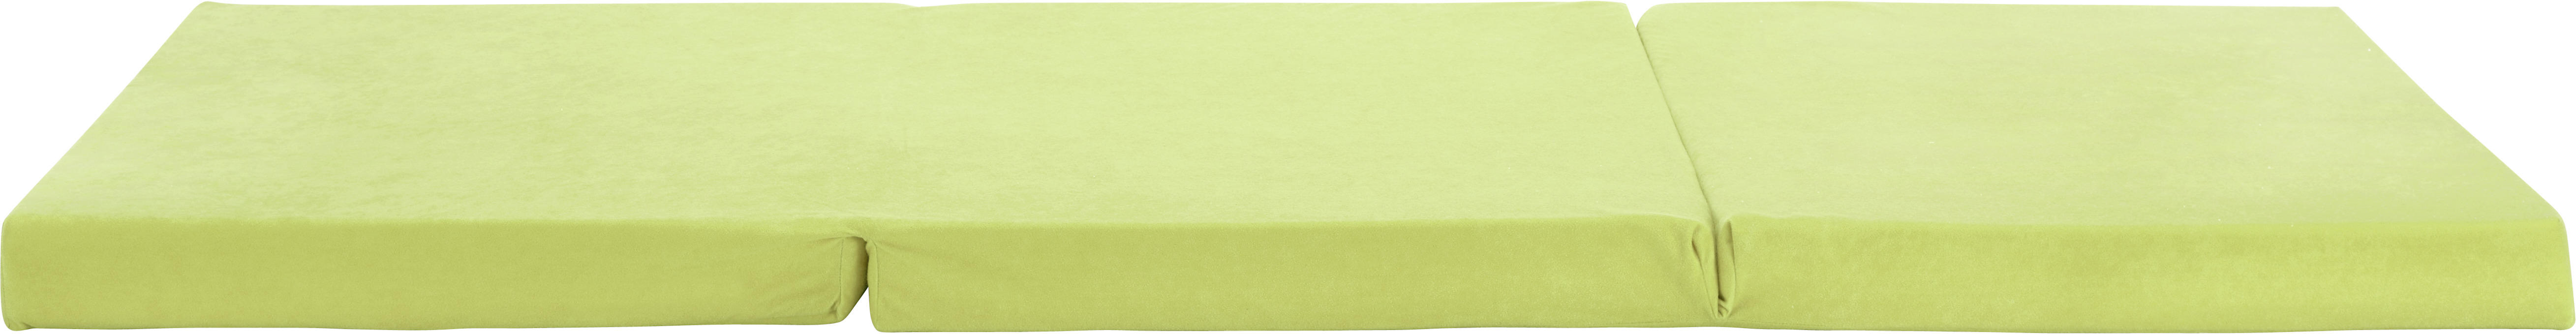 SKLADACÍ MATRAC, 65/186 cm - zelená, Basics, textil (65/186cm)